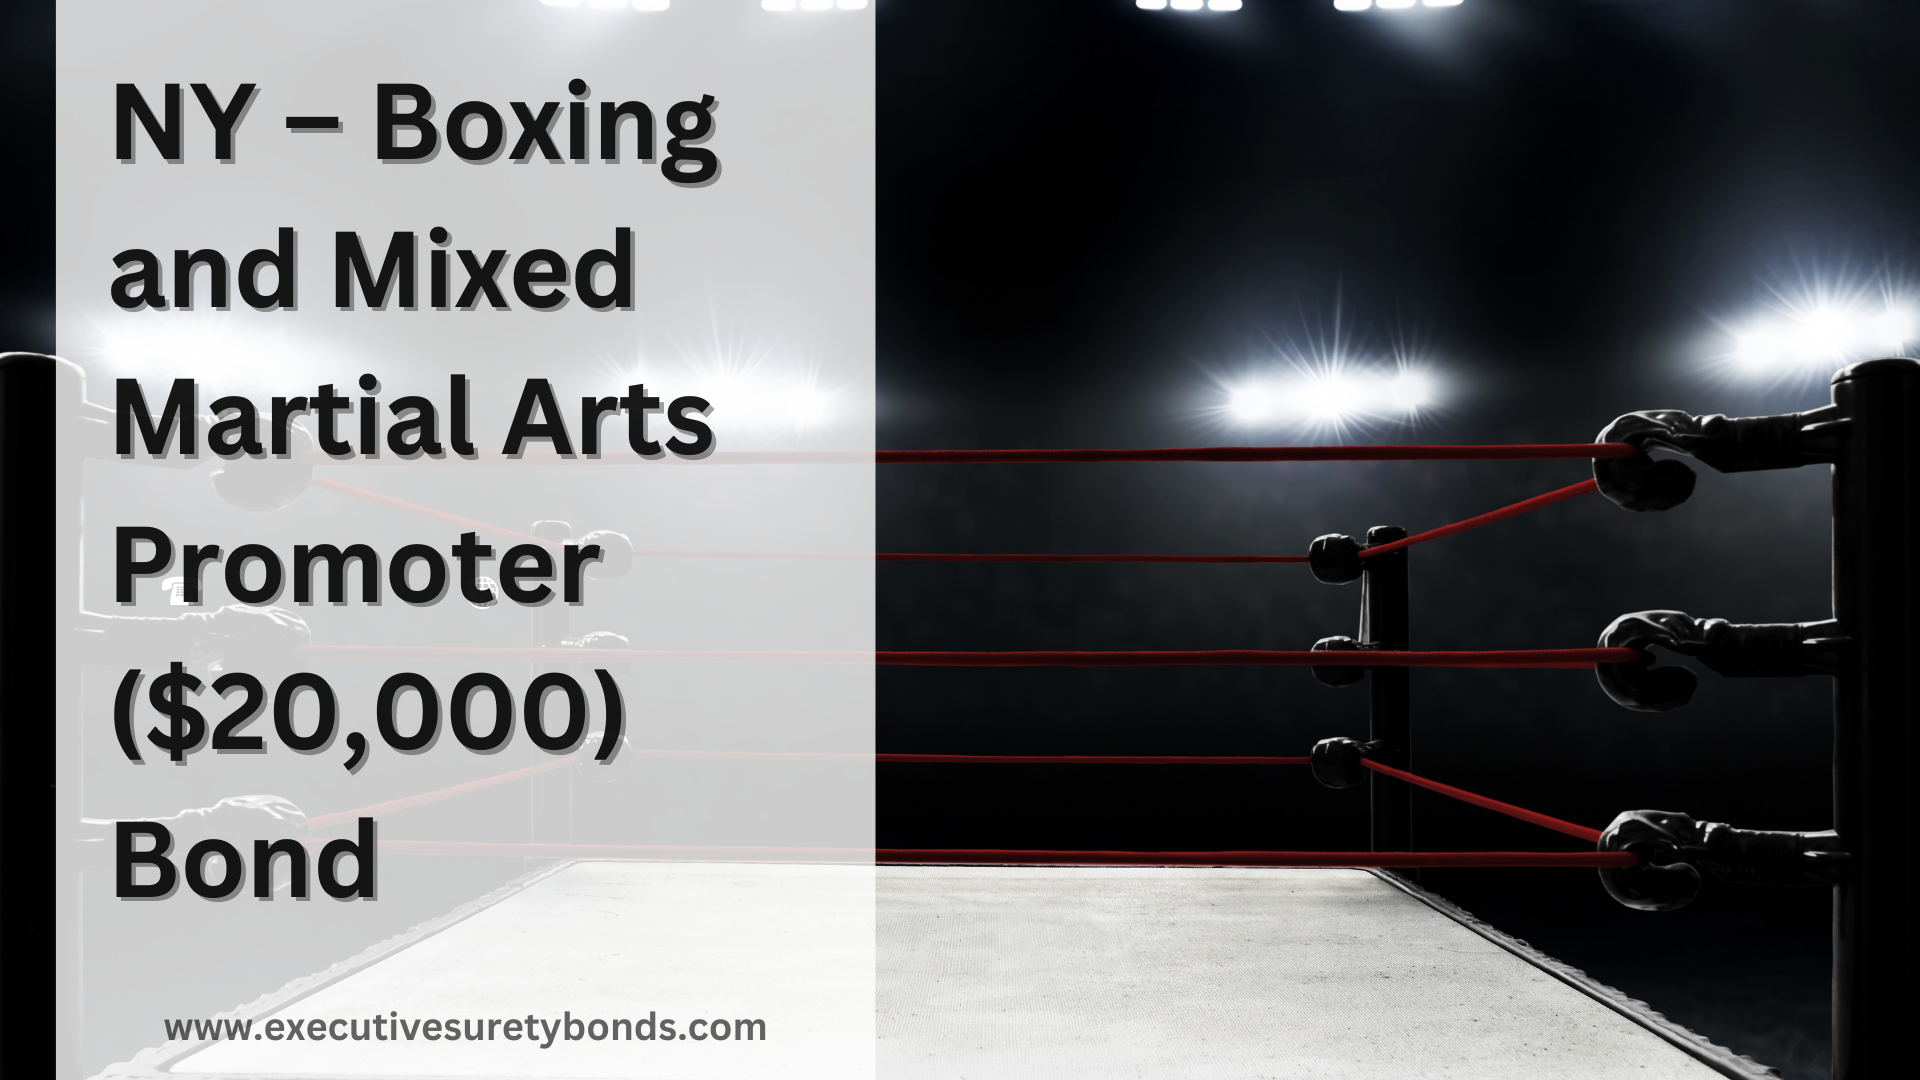 Surety Bond-NY – Boxing and Mixed Martial Arts Promoter ($20,000) Bond